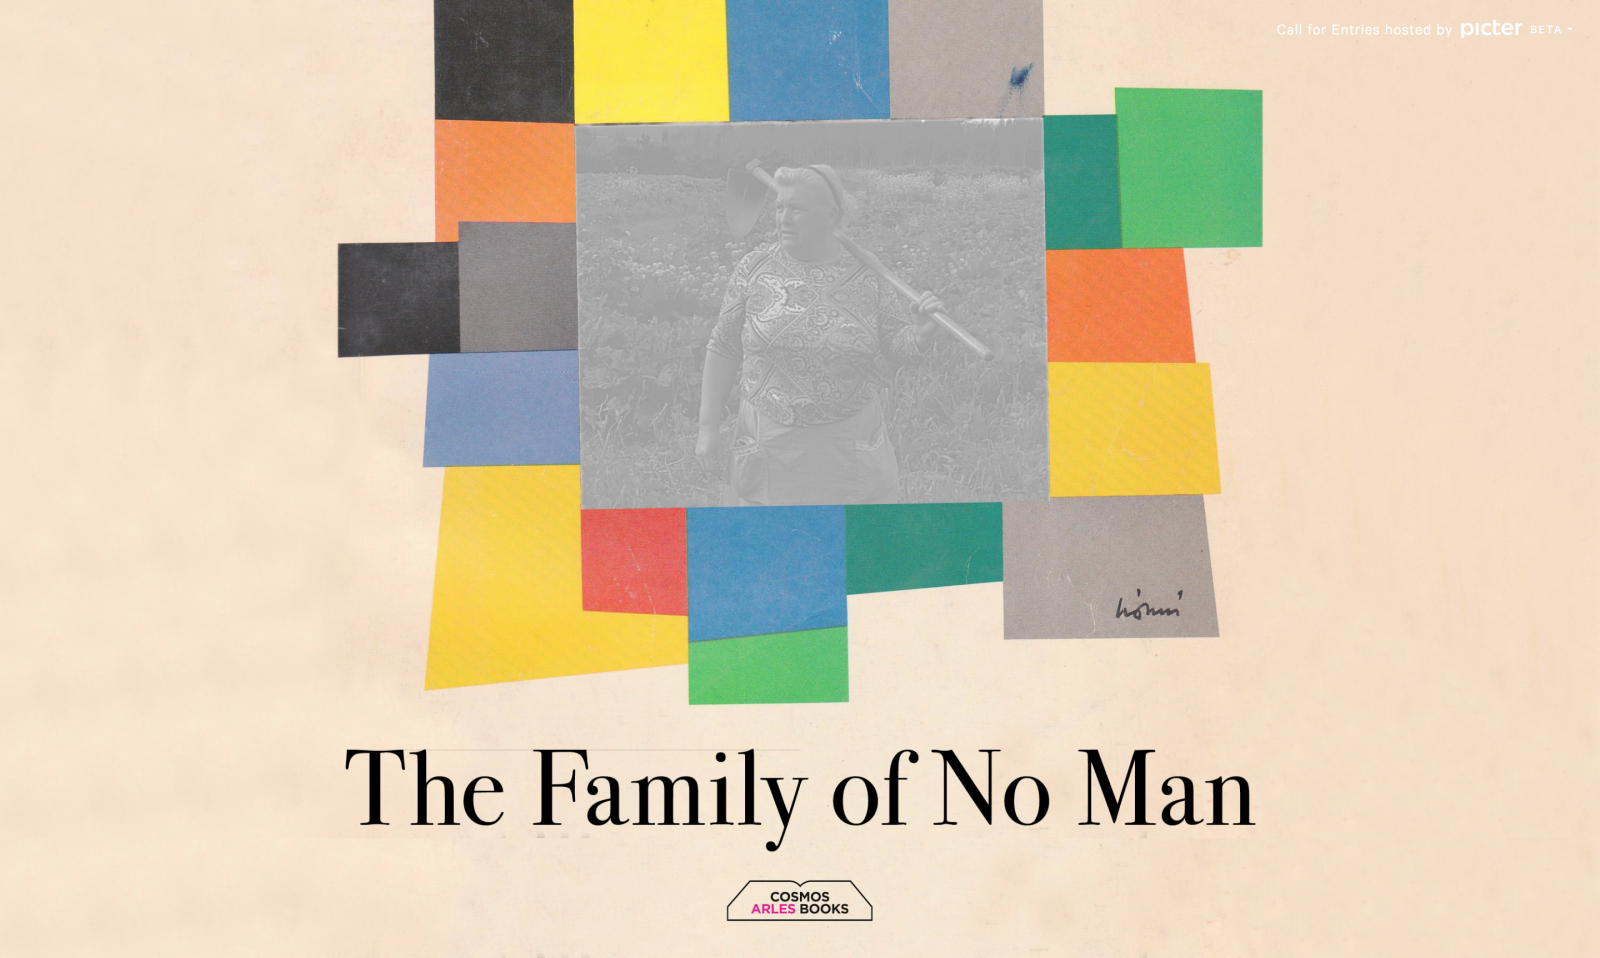 Thumbnail of 'Family of No Man' exhibition at 'Les Rencontres de la Photographie Arles'